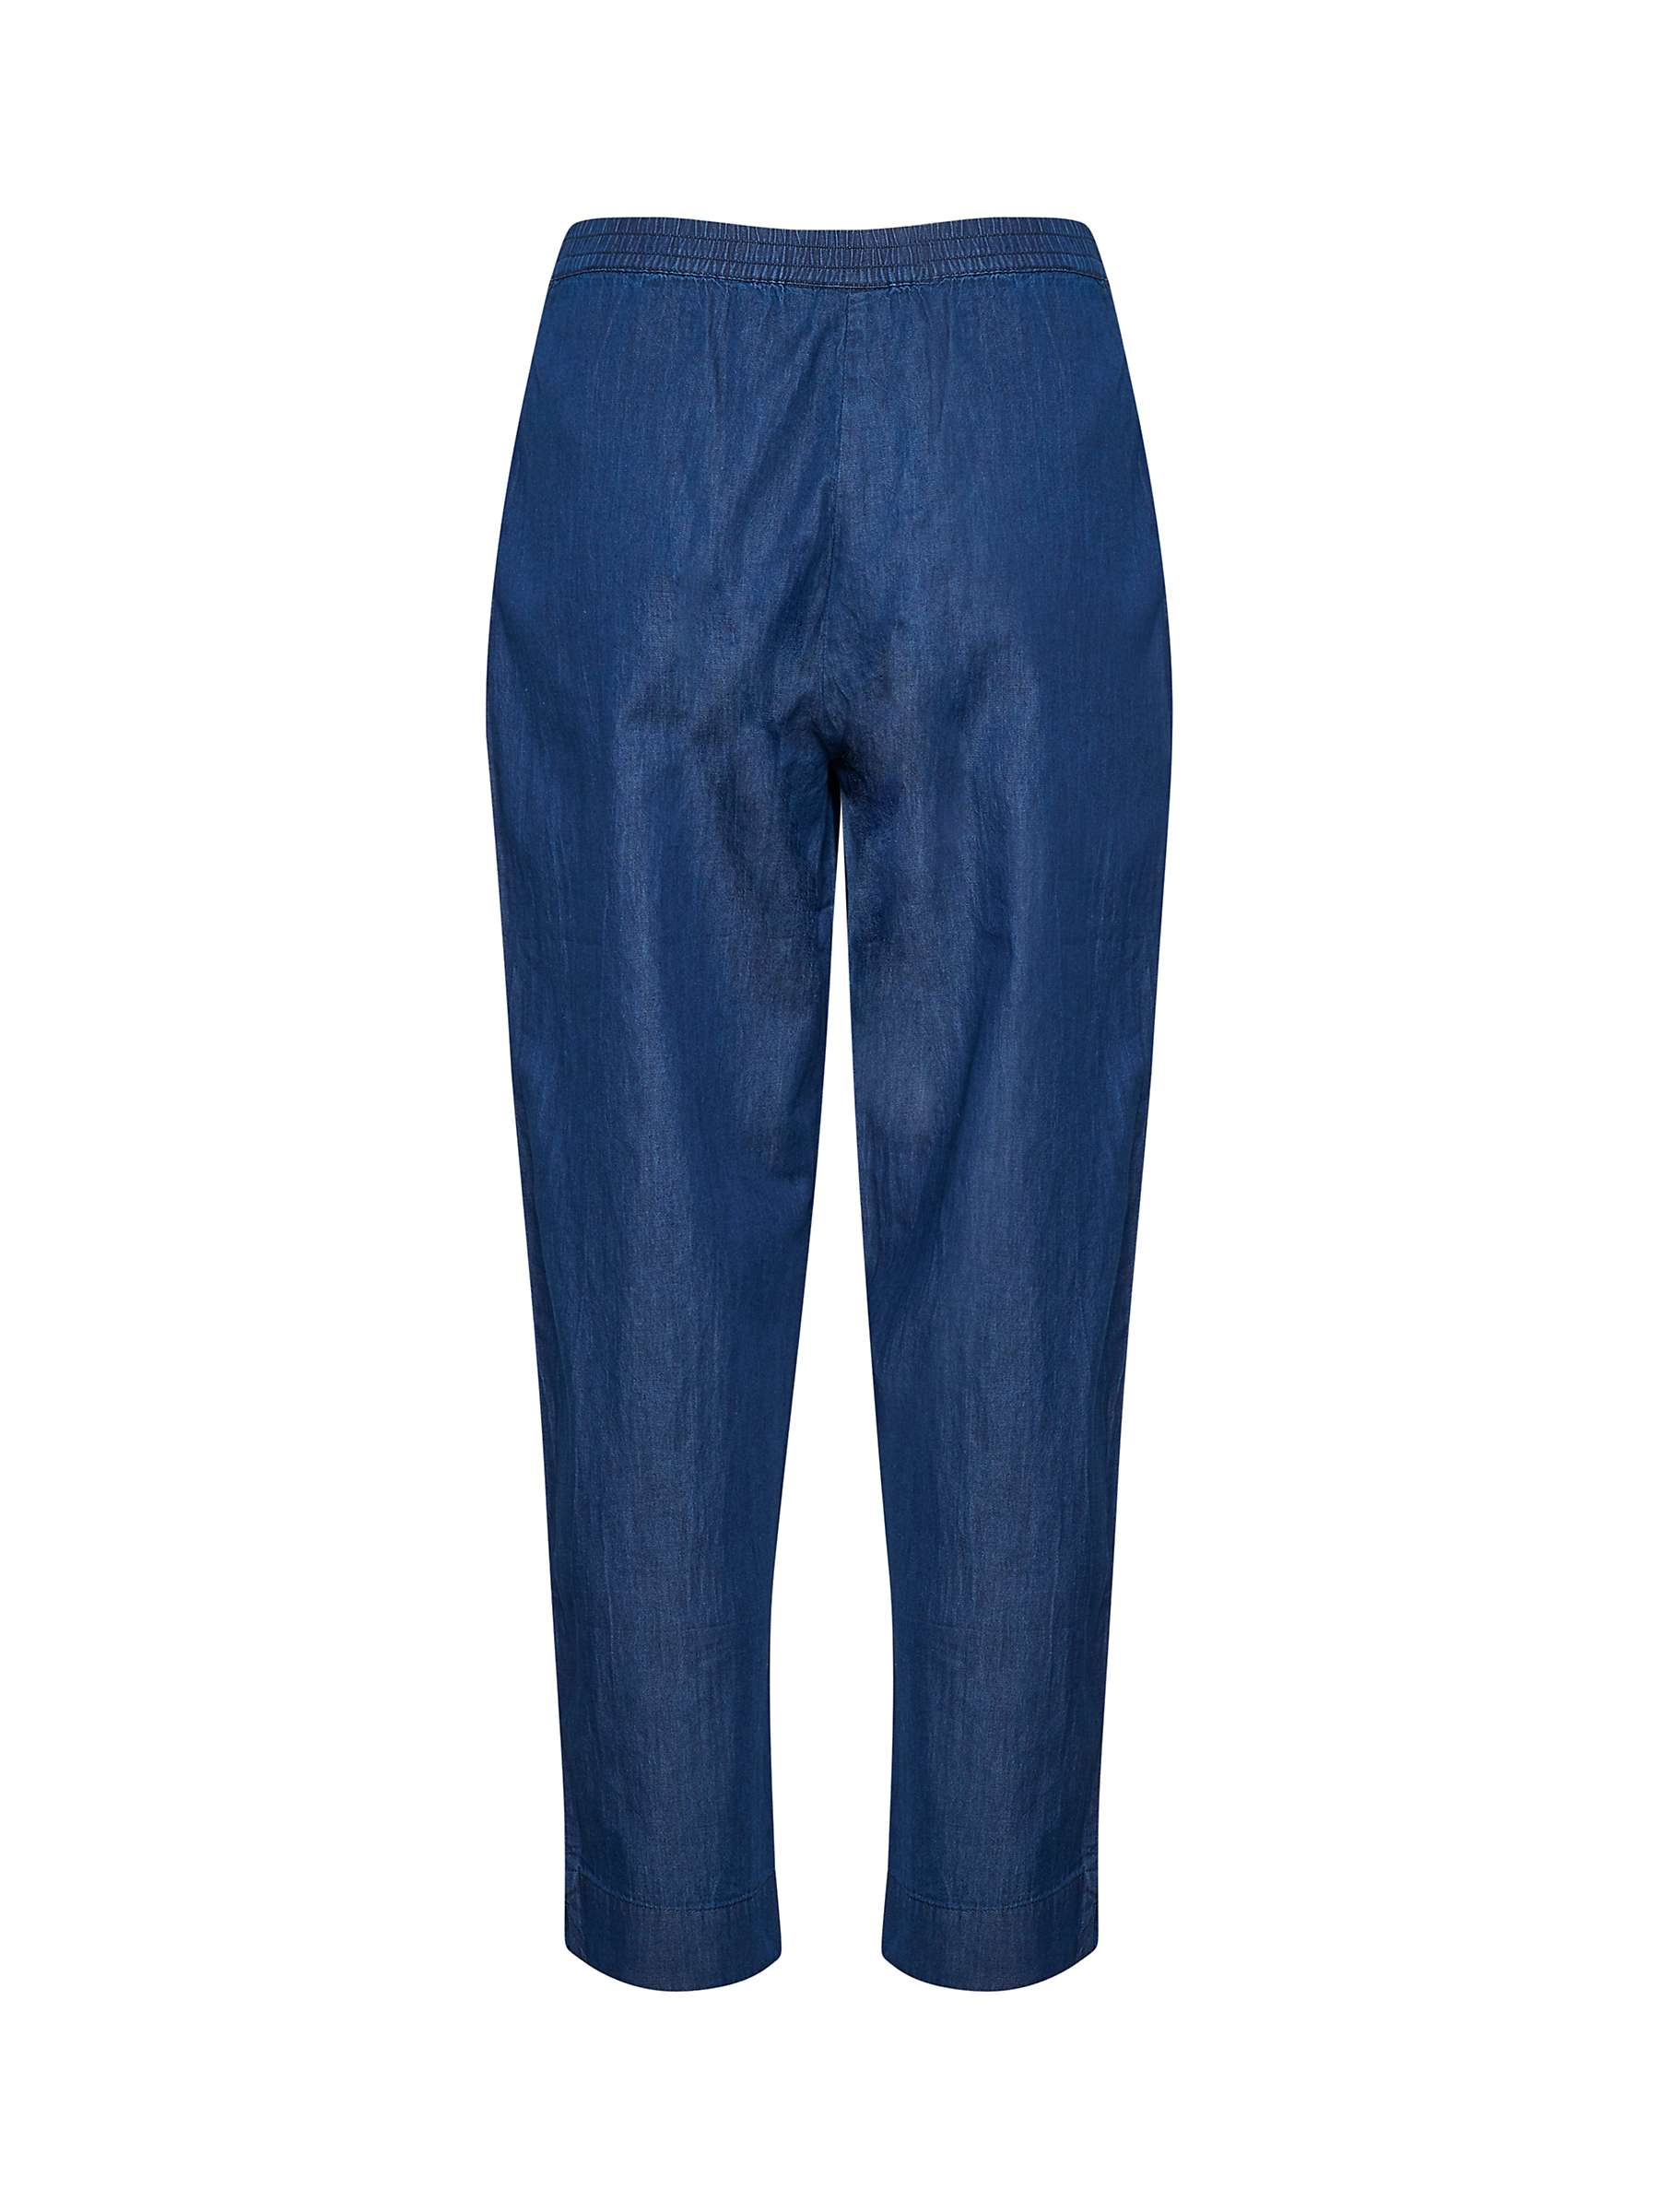 Buy Saint Tropez Shea Denim Trousers, Night Sky Online at johnlewis.com